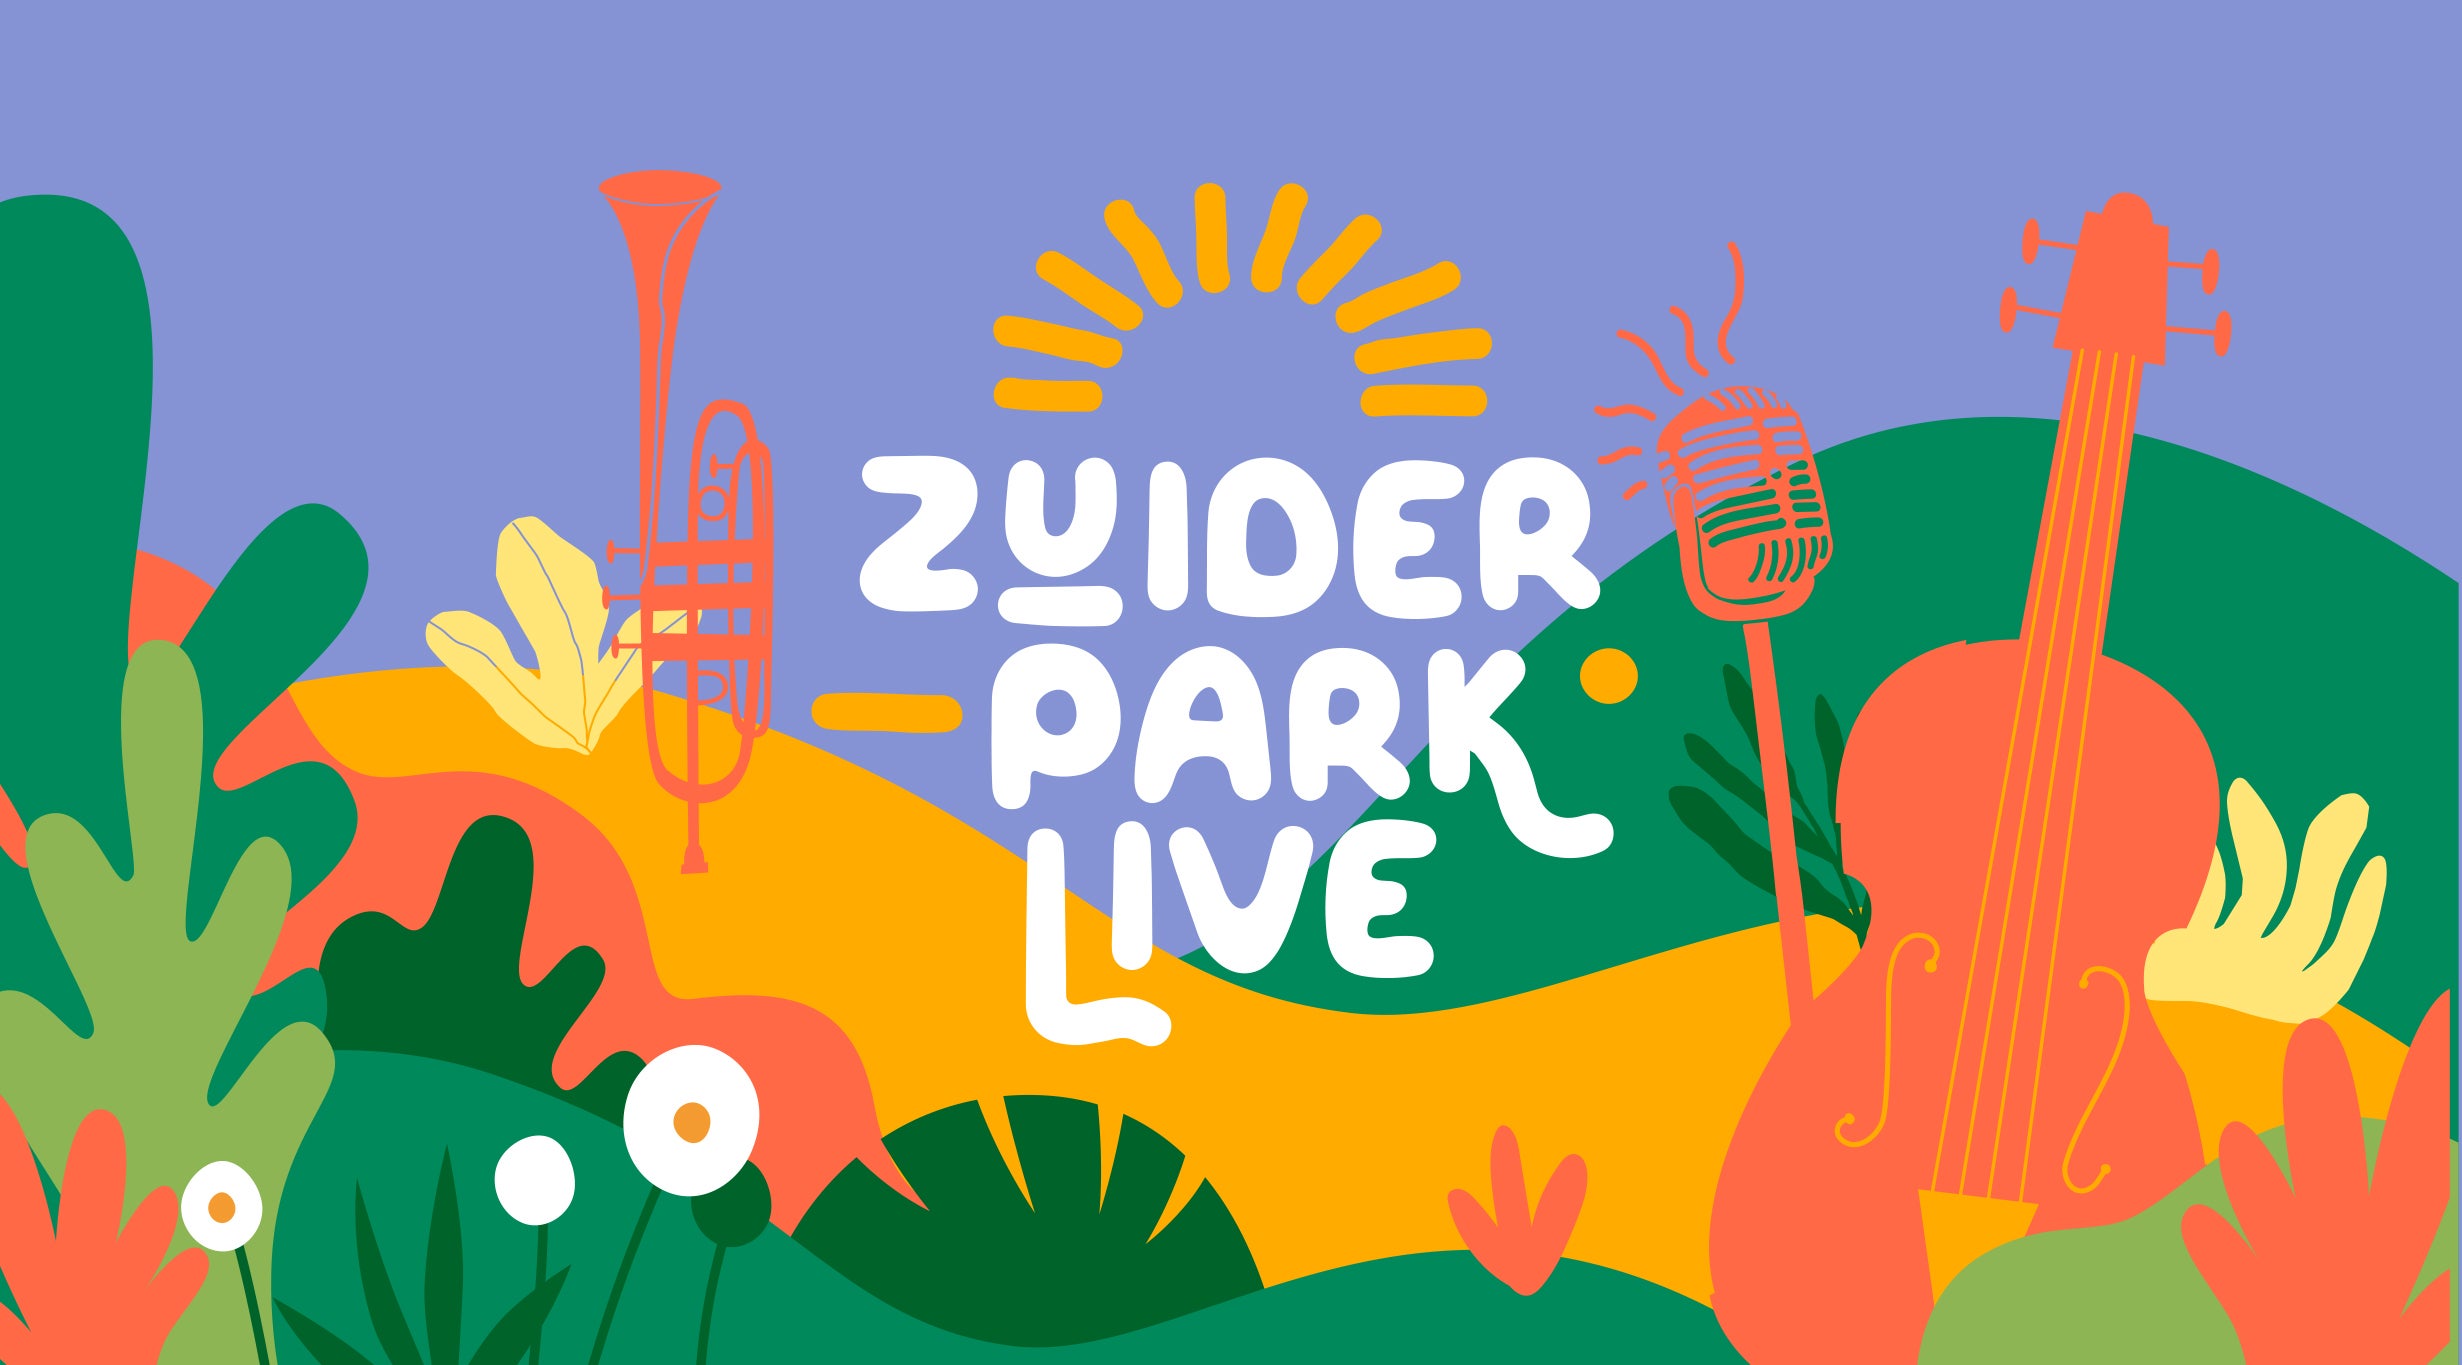 Zuiderpark Live: Paul Carrack